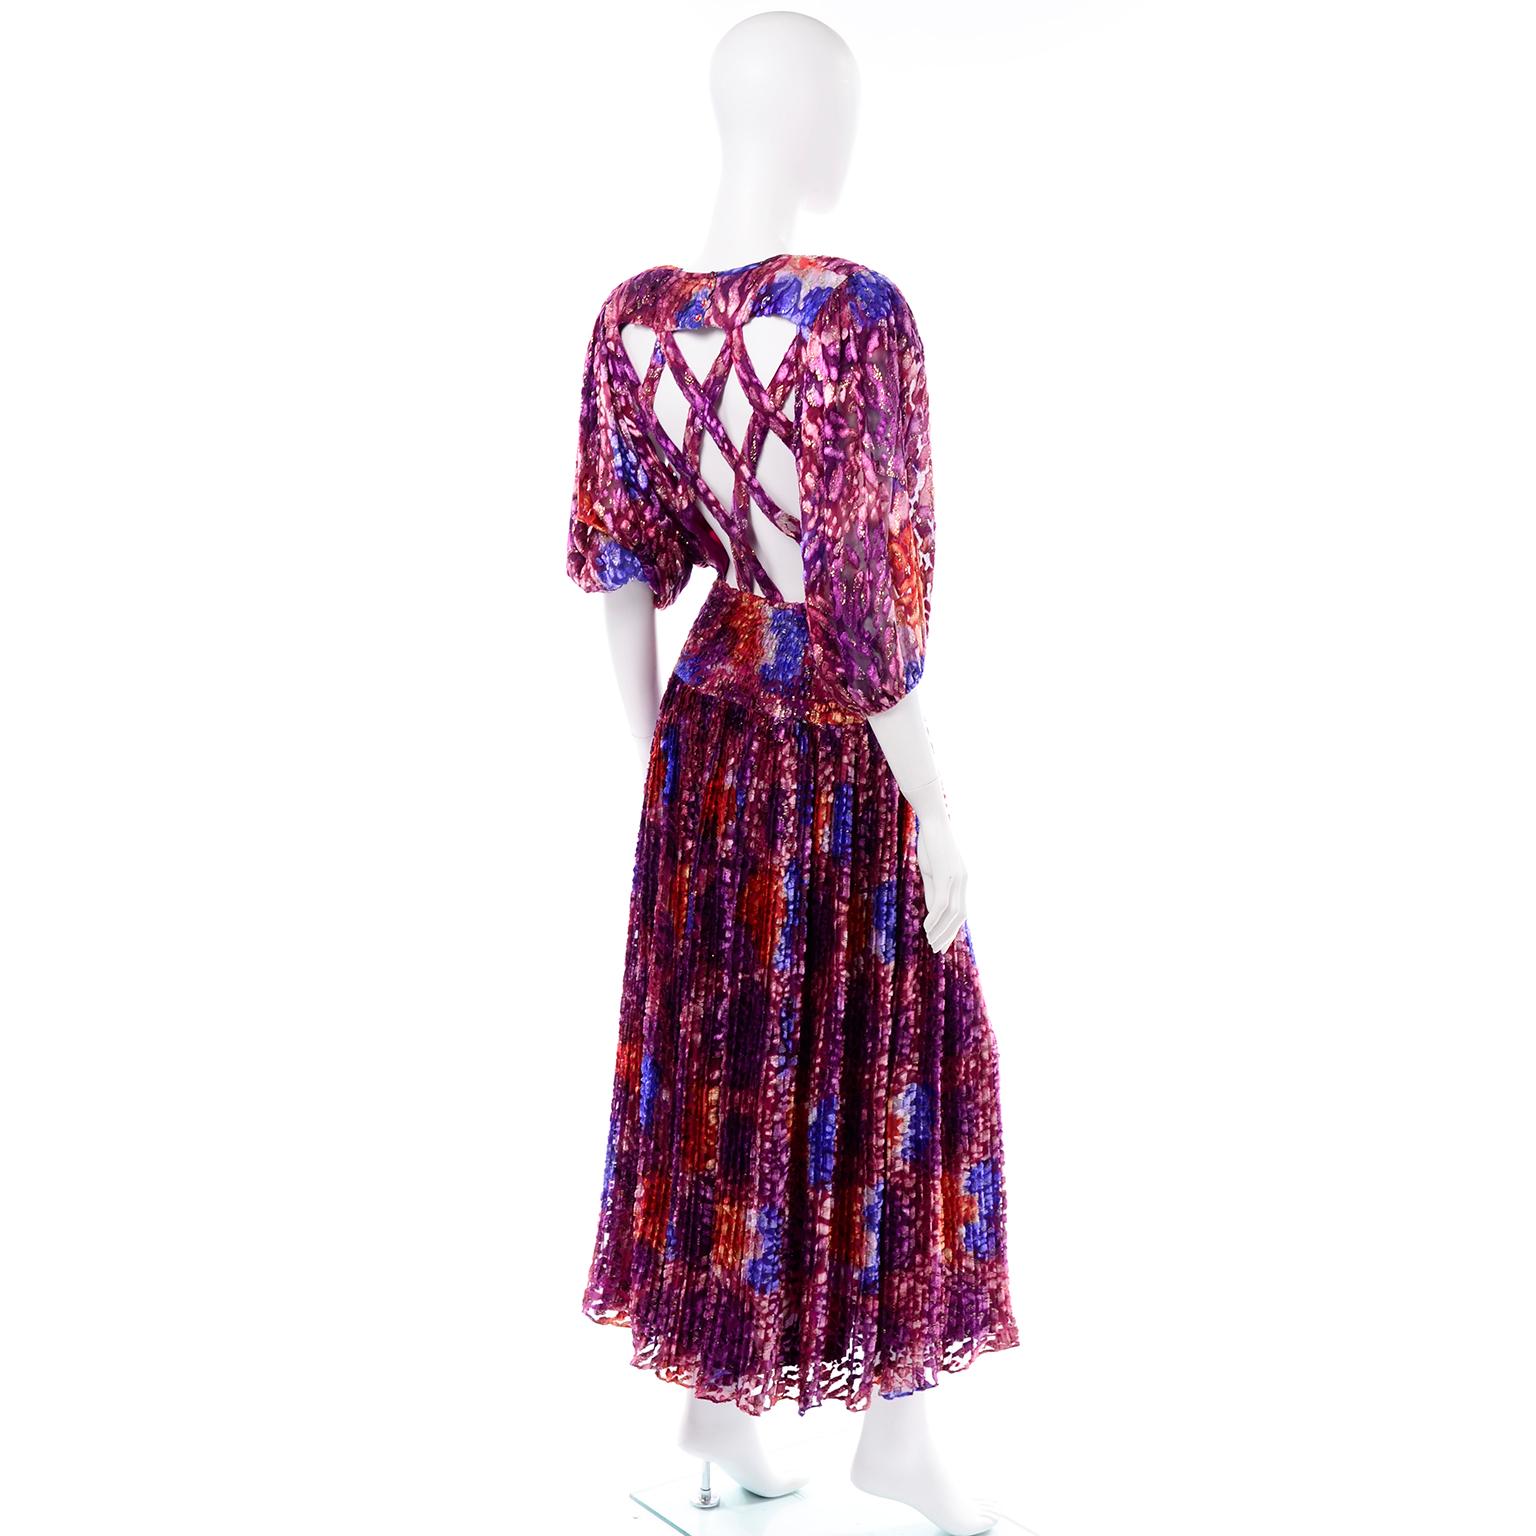 Diane Freis Vintage Purple Pink Velvet Metallic Silk Dress W Open Lattice Work 2